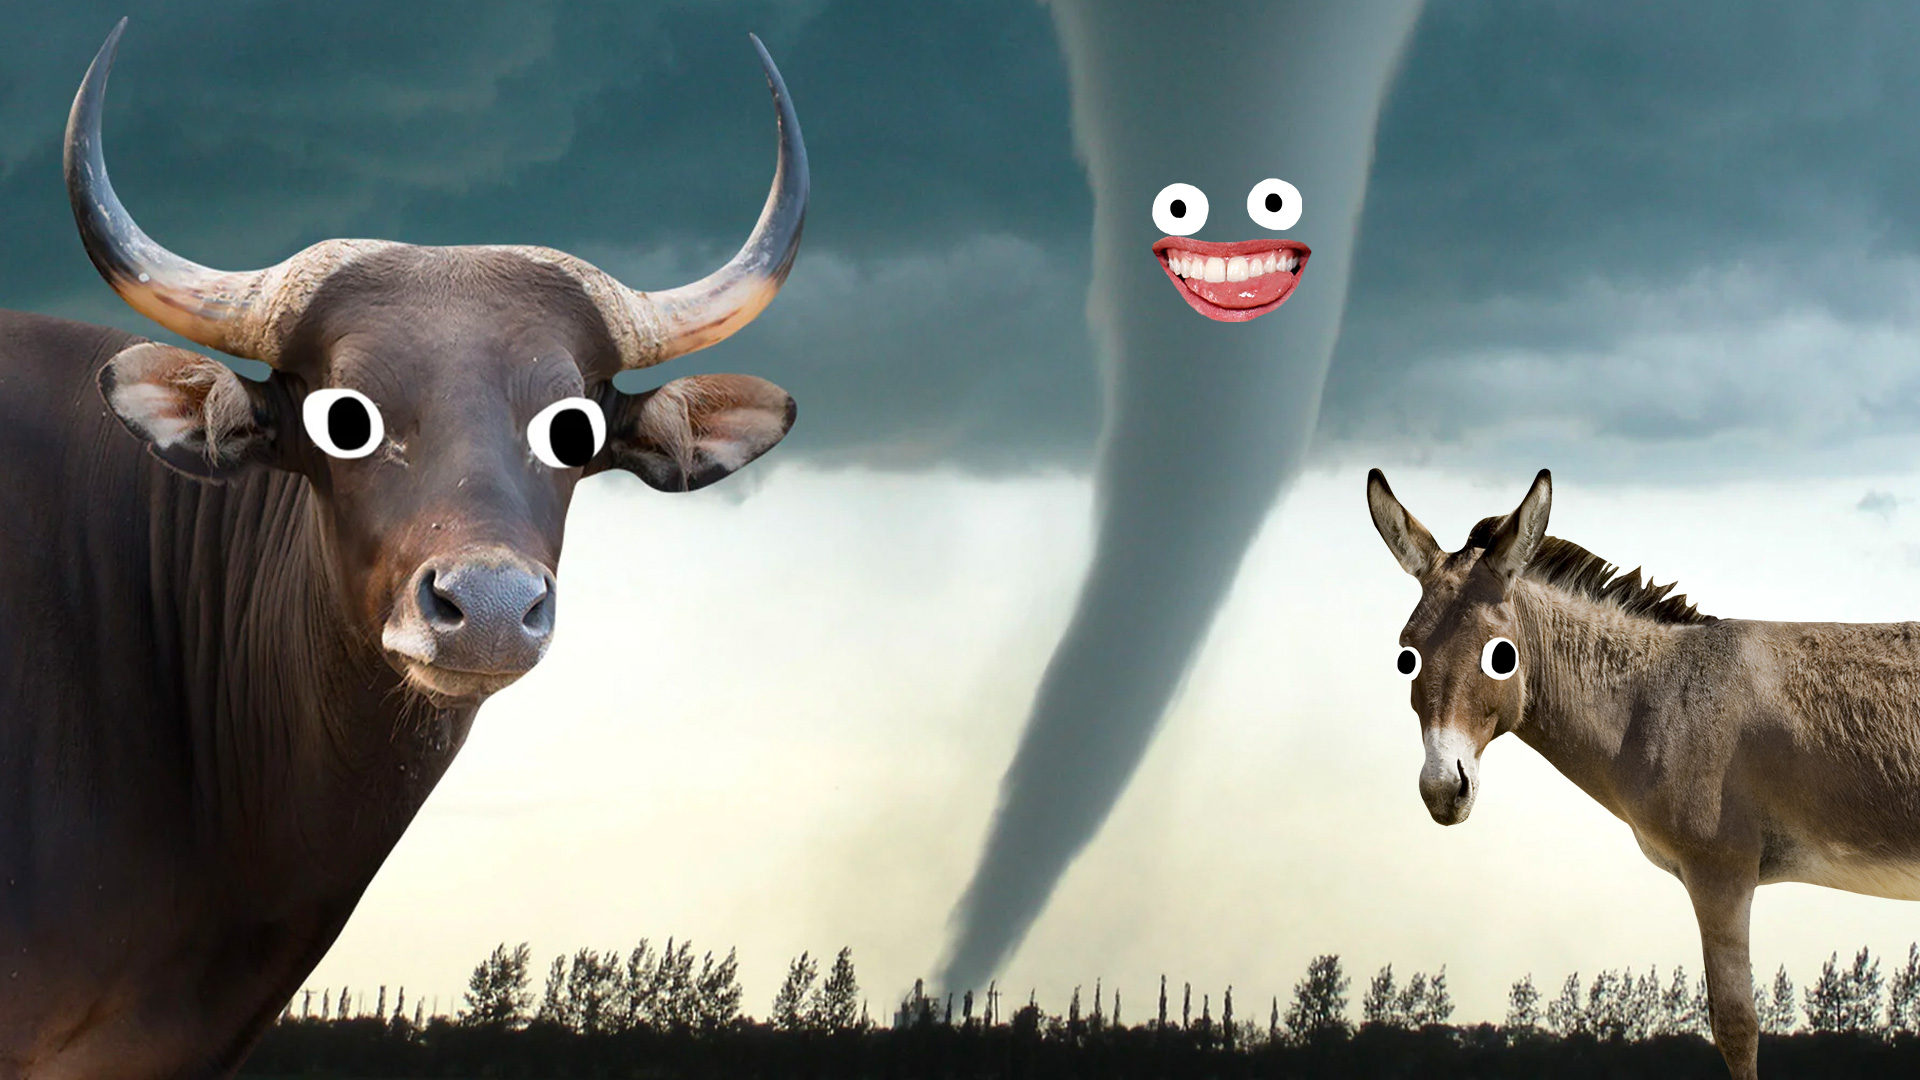 A bull and a donkey look at a tornado